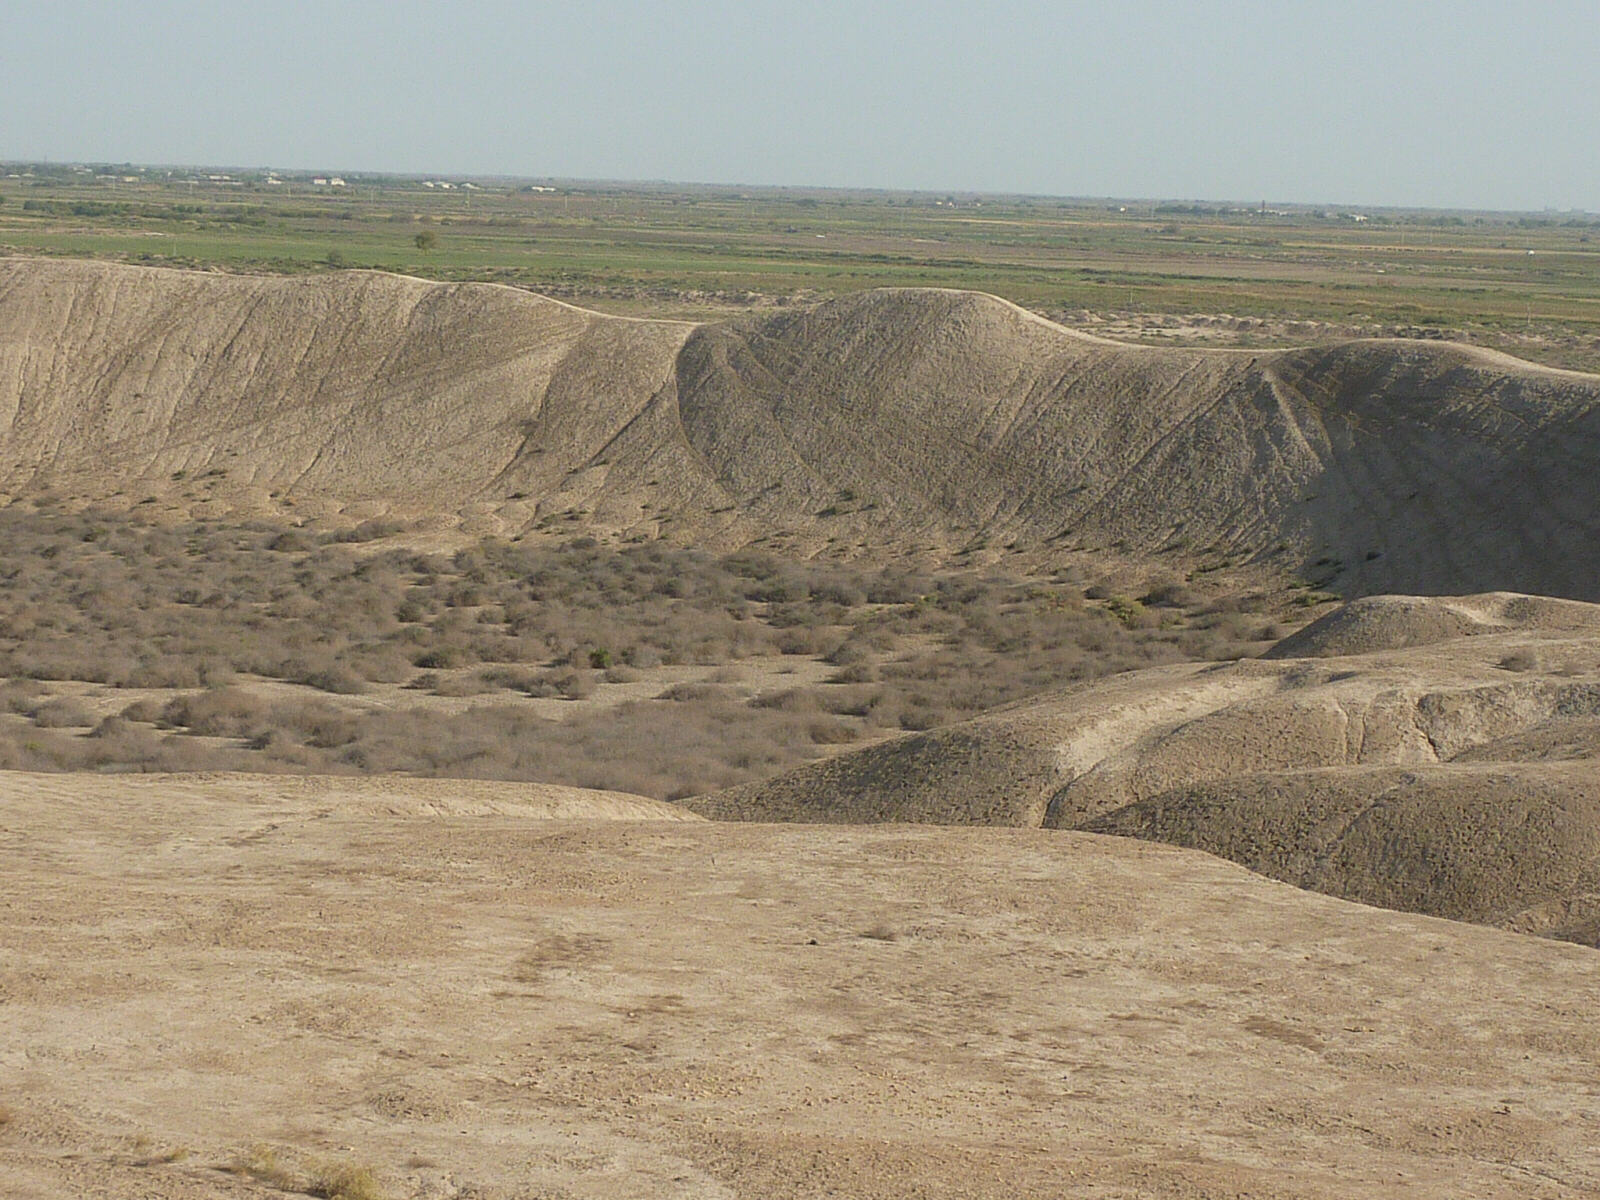 Erk Kala in the ancient city of Merv, Turkmenistan